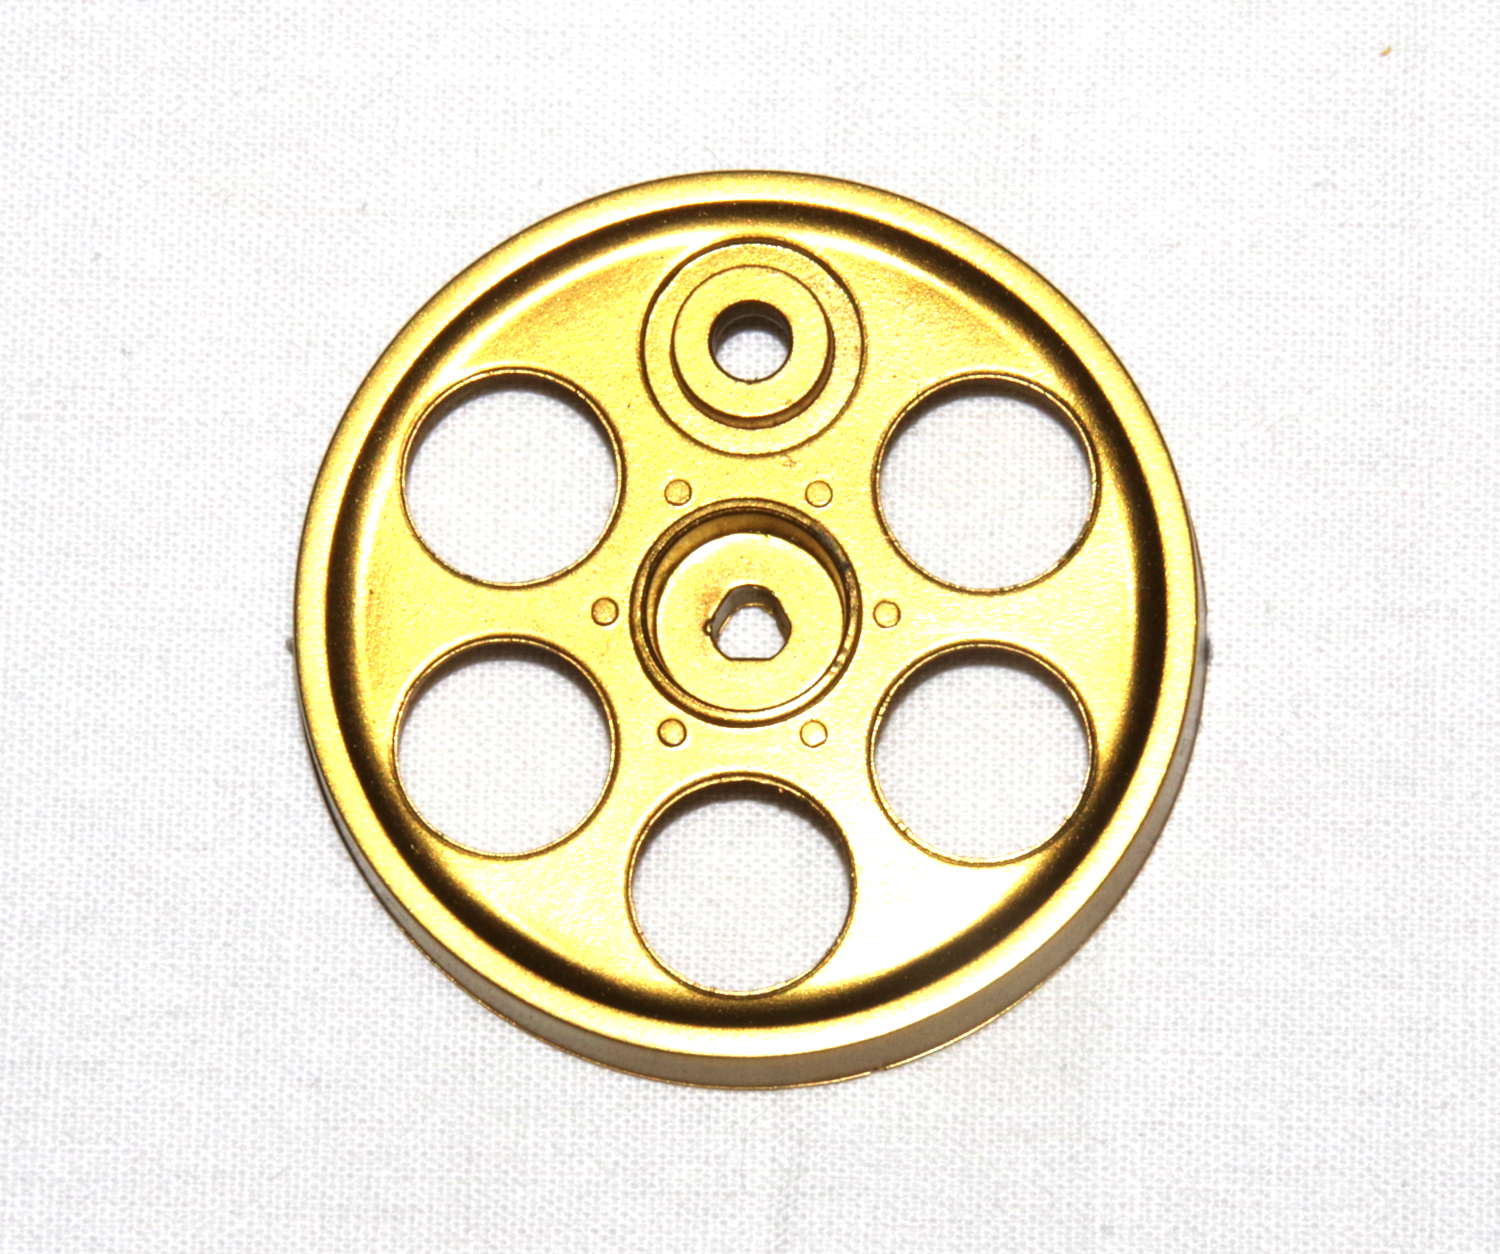 B452 Locomotive Wheel 2'' Gold Plastic Triflat Original